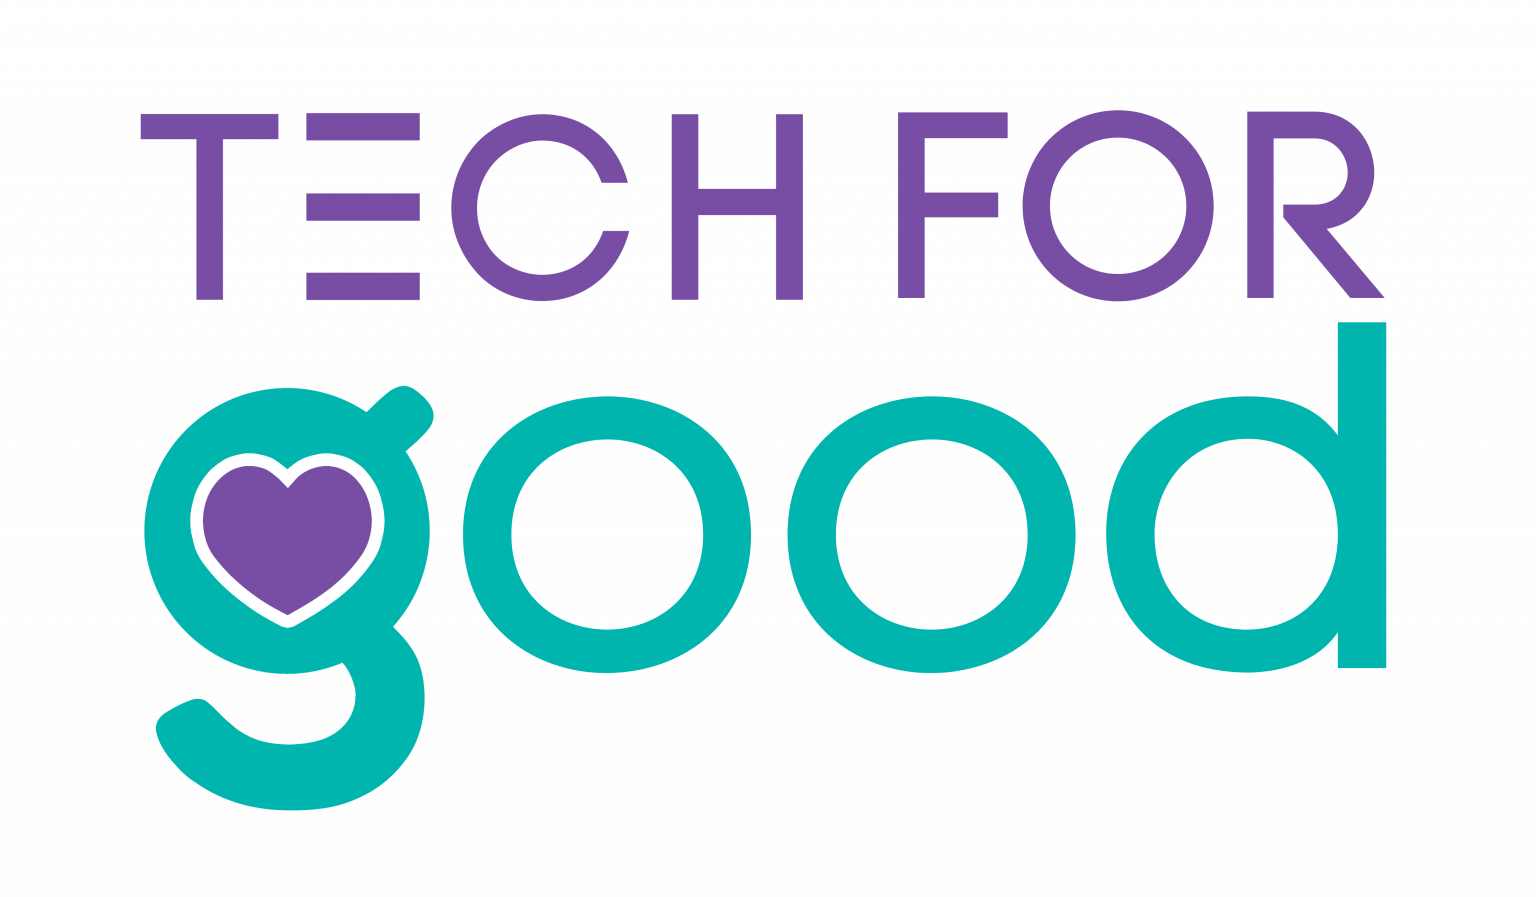 Tech For Good